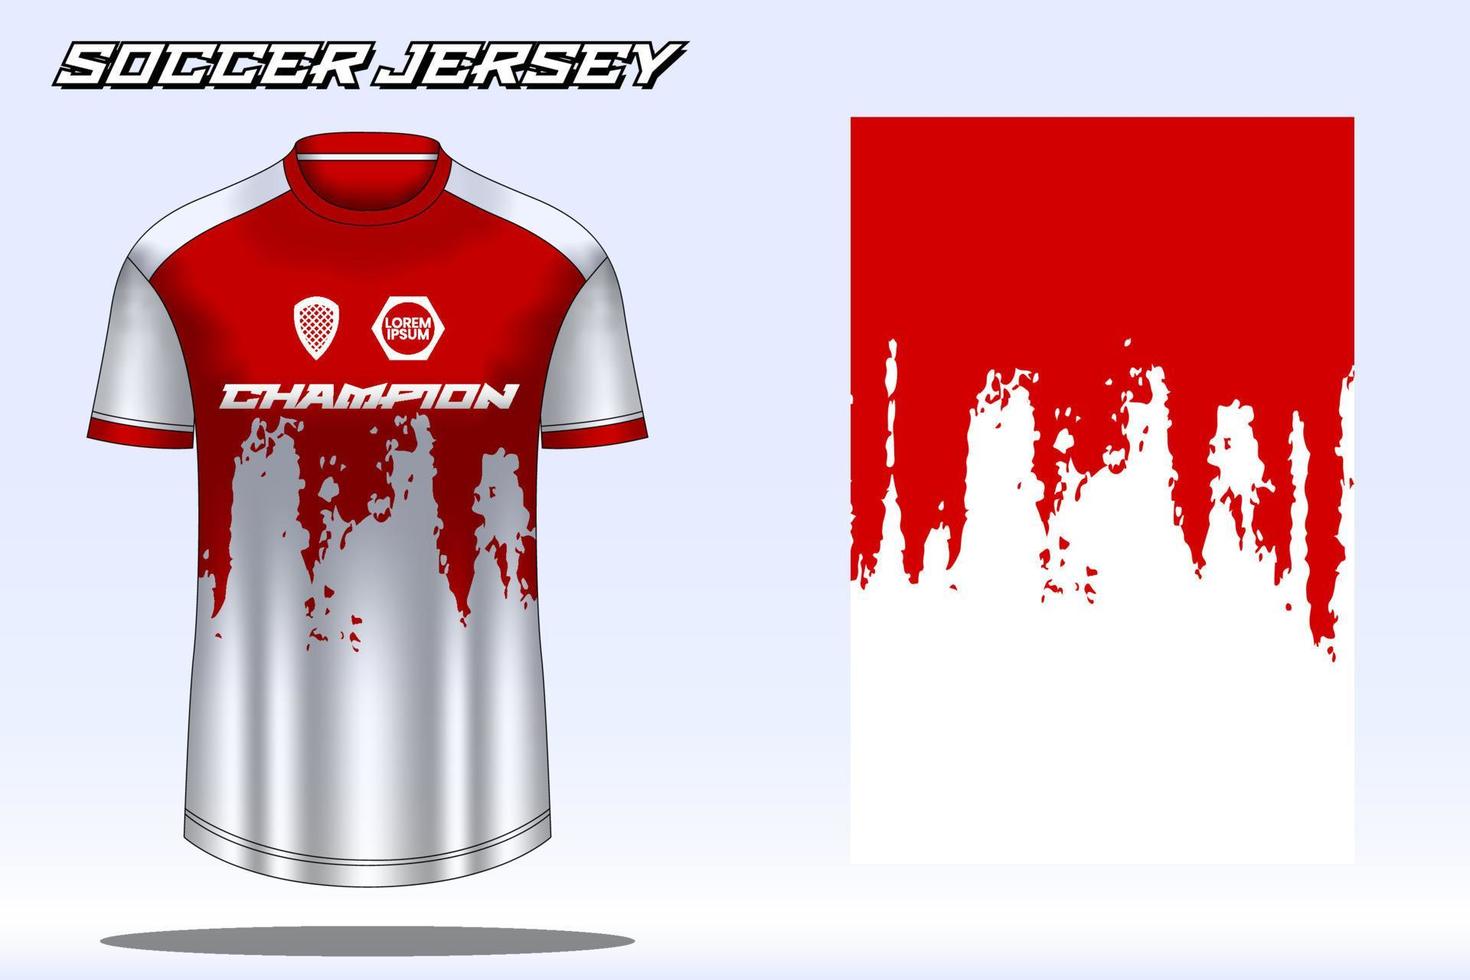 Soccer jersey sport t-shirt design mockup for football club 08 vector